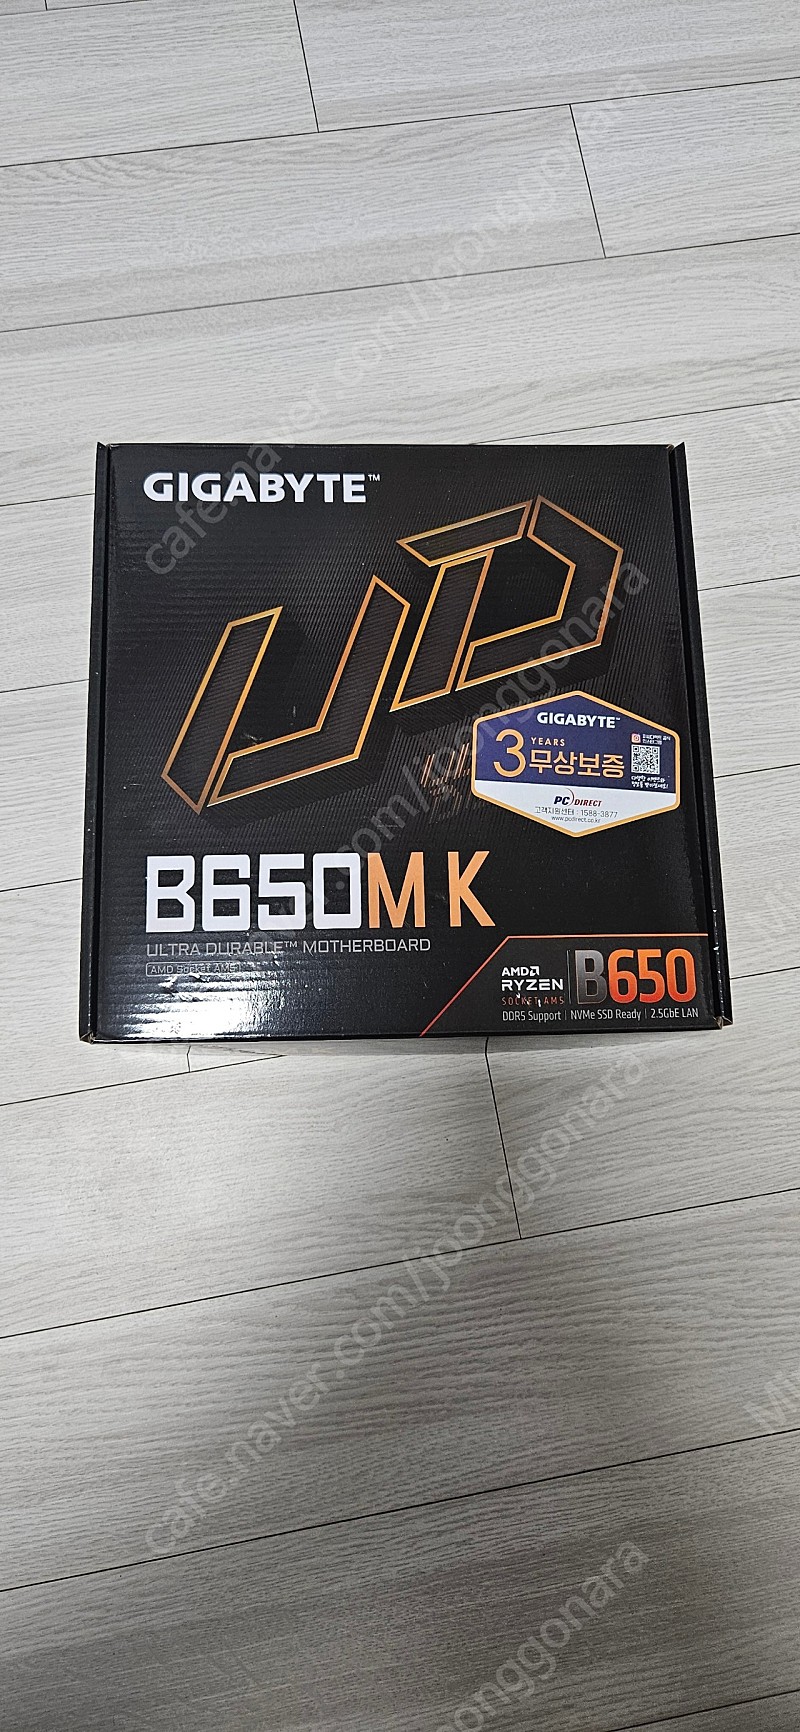 Gigabyte B650m K(기가바이트 메인보드)